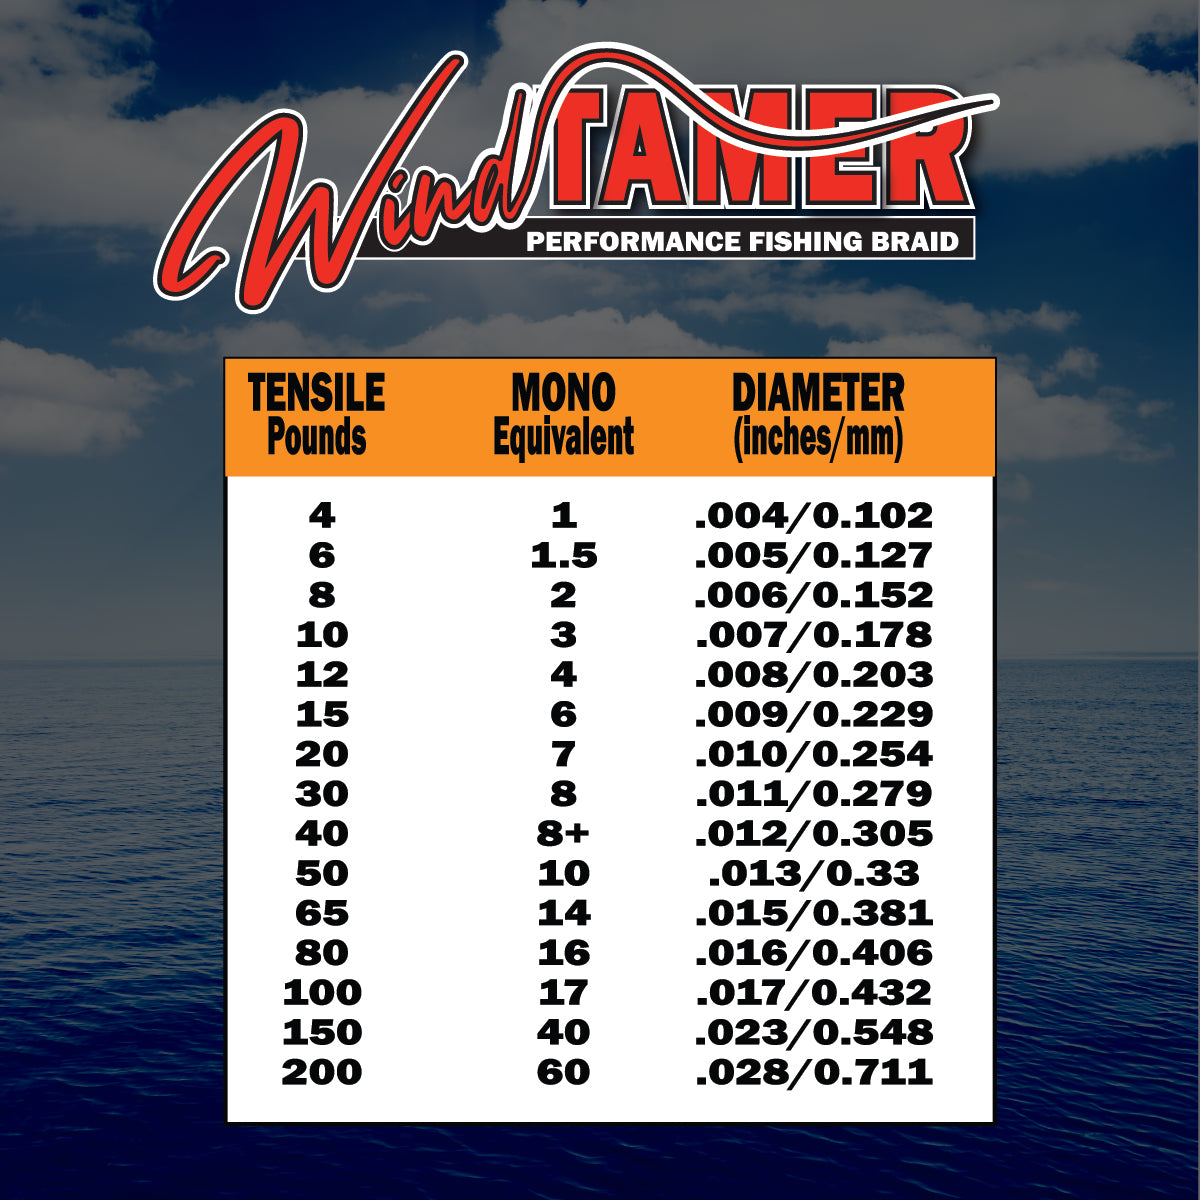 Windtamer Braid Fishing Line Tensile Mono Equivalent and Diameter Chart